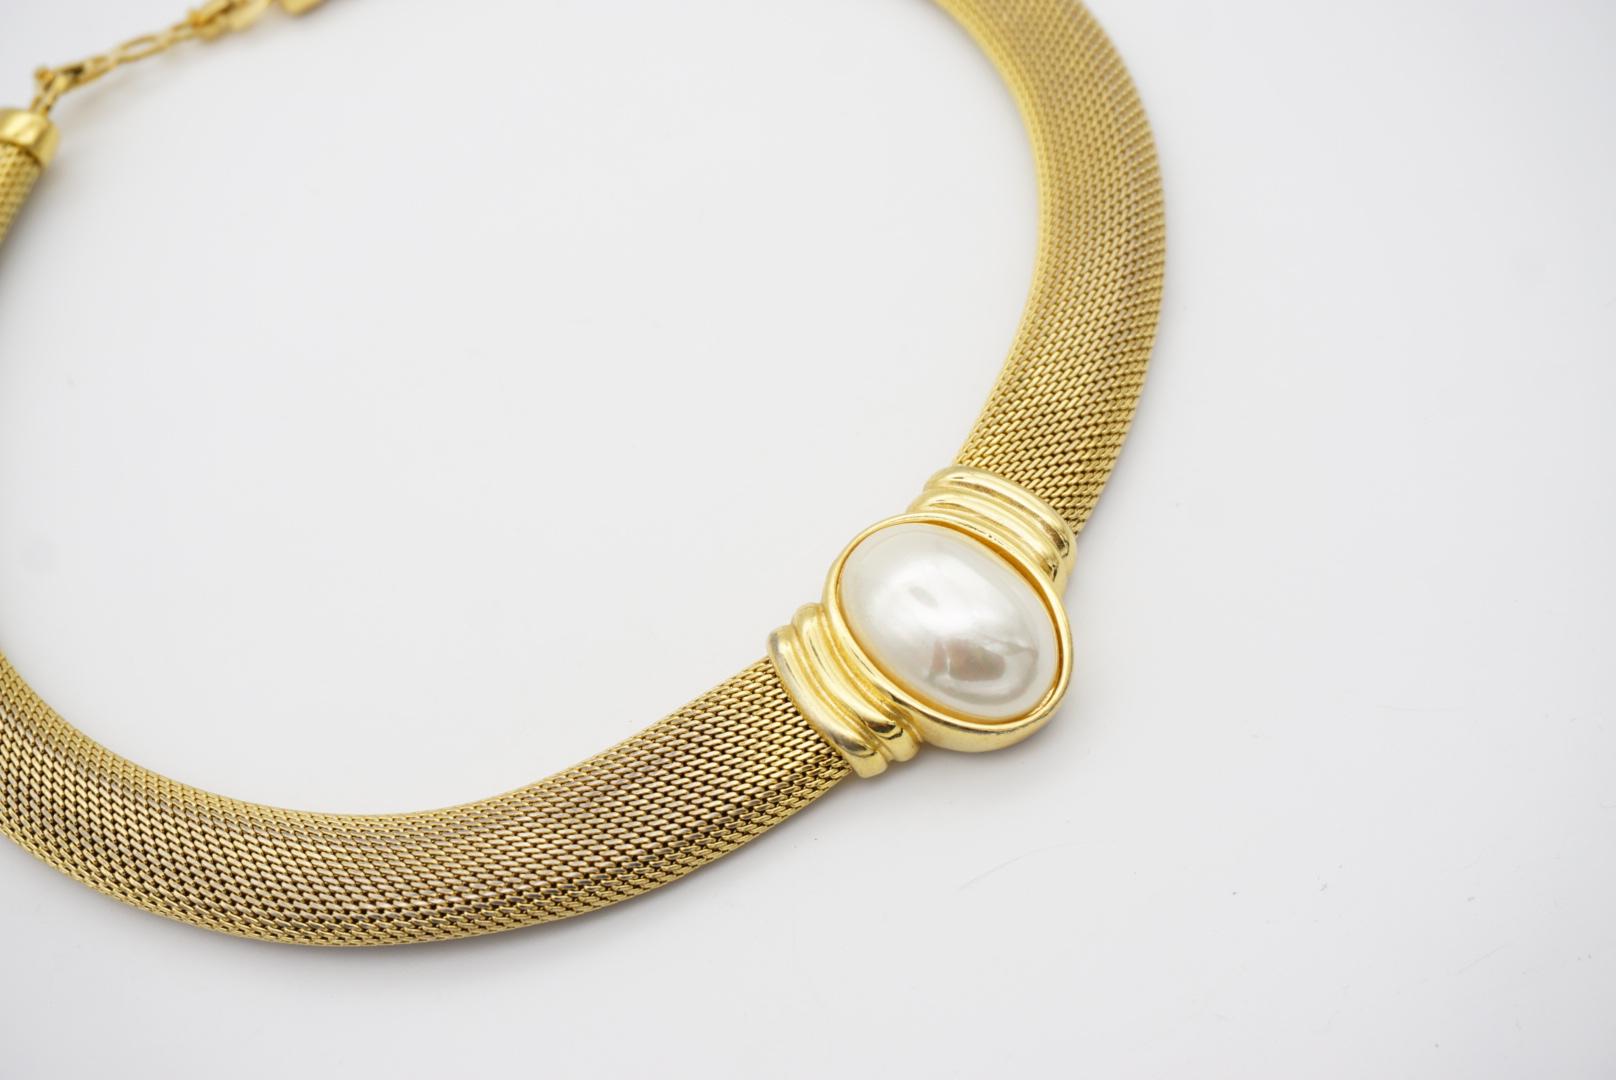 Christian Dior Vintage 1980s Large Oval White Pearl Snake Omega Gold Necklace For Sale 2